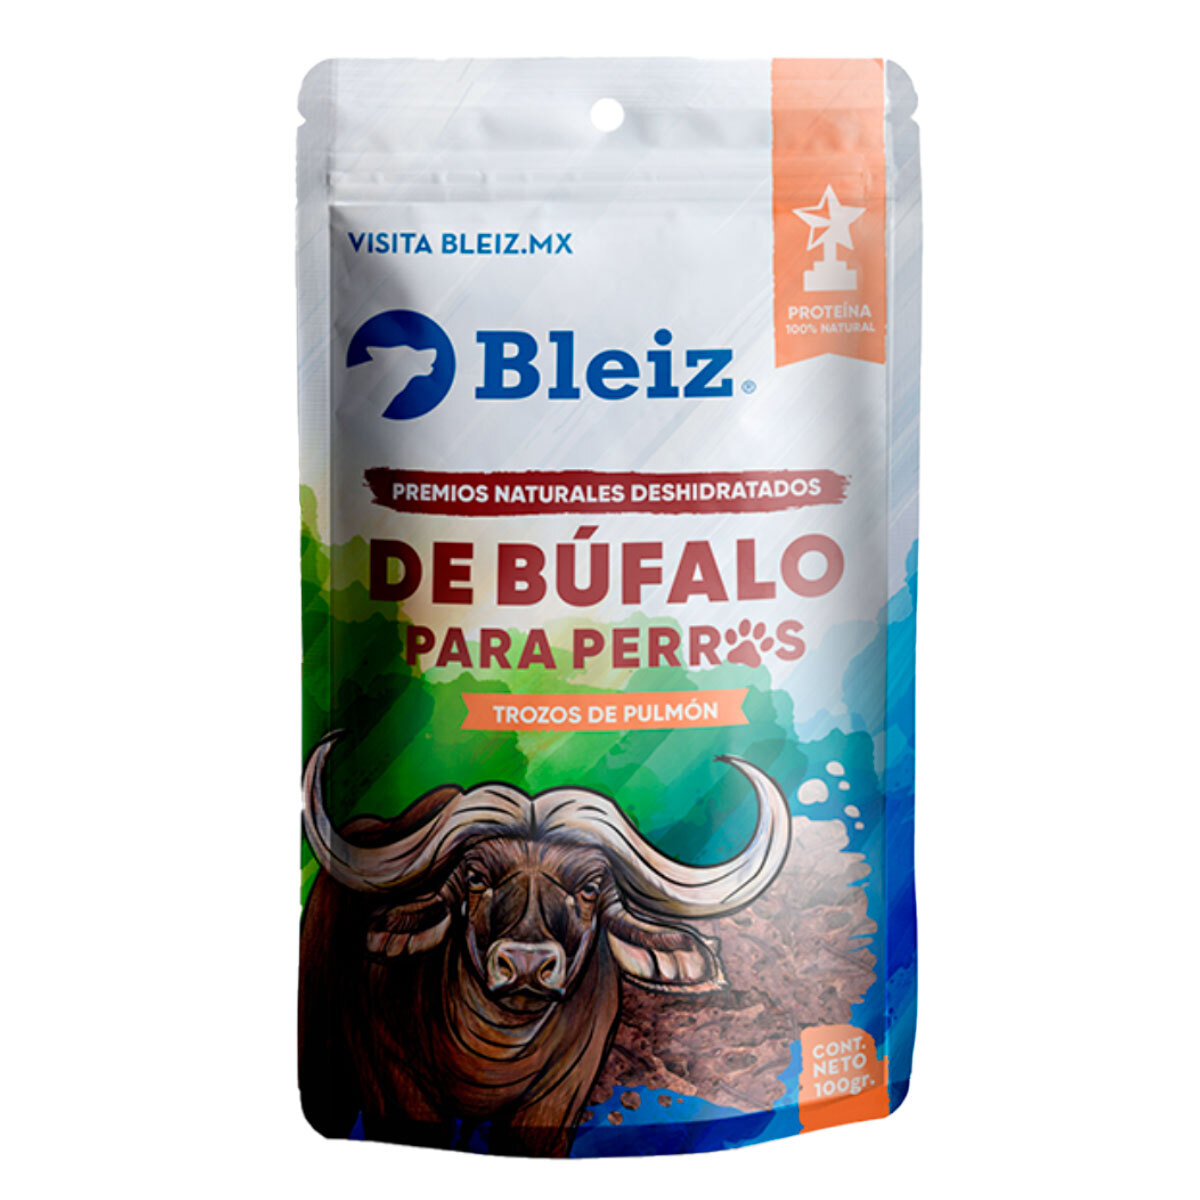 Bleiz Premios Naturales Deshidratados de Búfalo para Perro Receta Trozos de Pulmón, 100 g